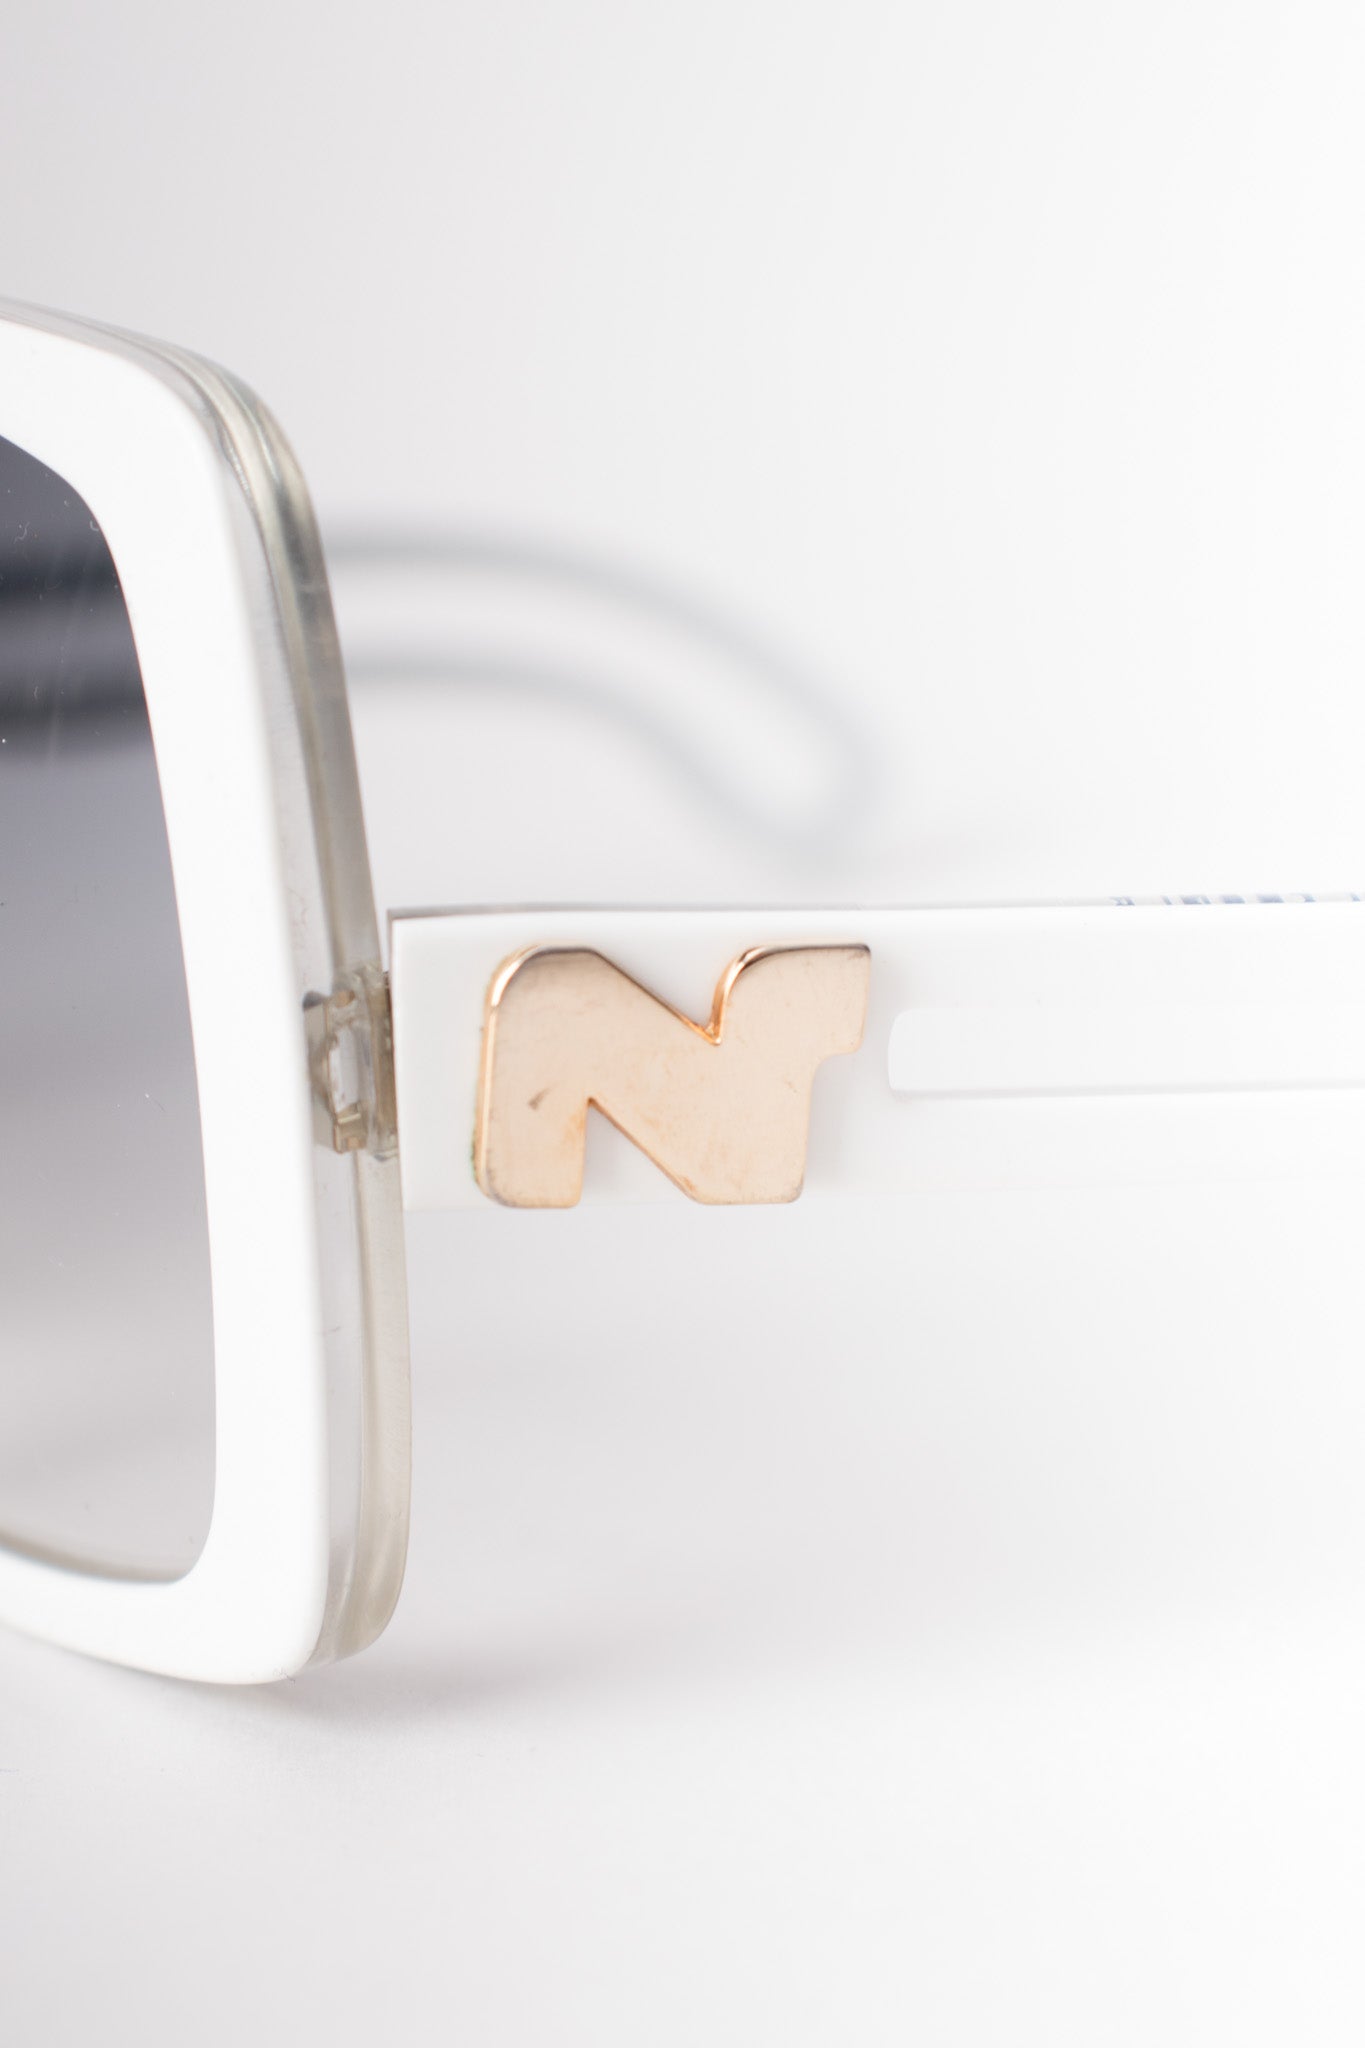 Nina Ricci Vintage Oversized White Square Outline Sunglasses